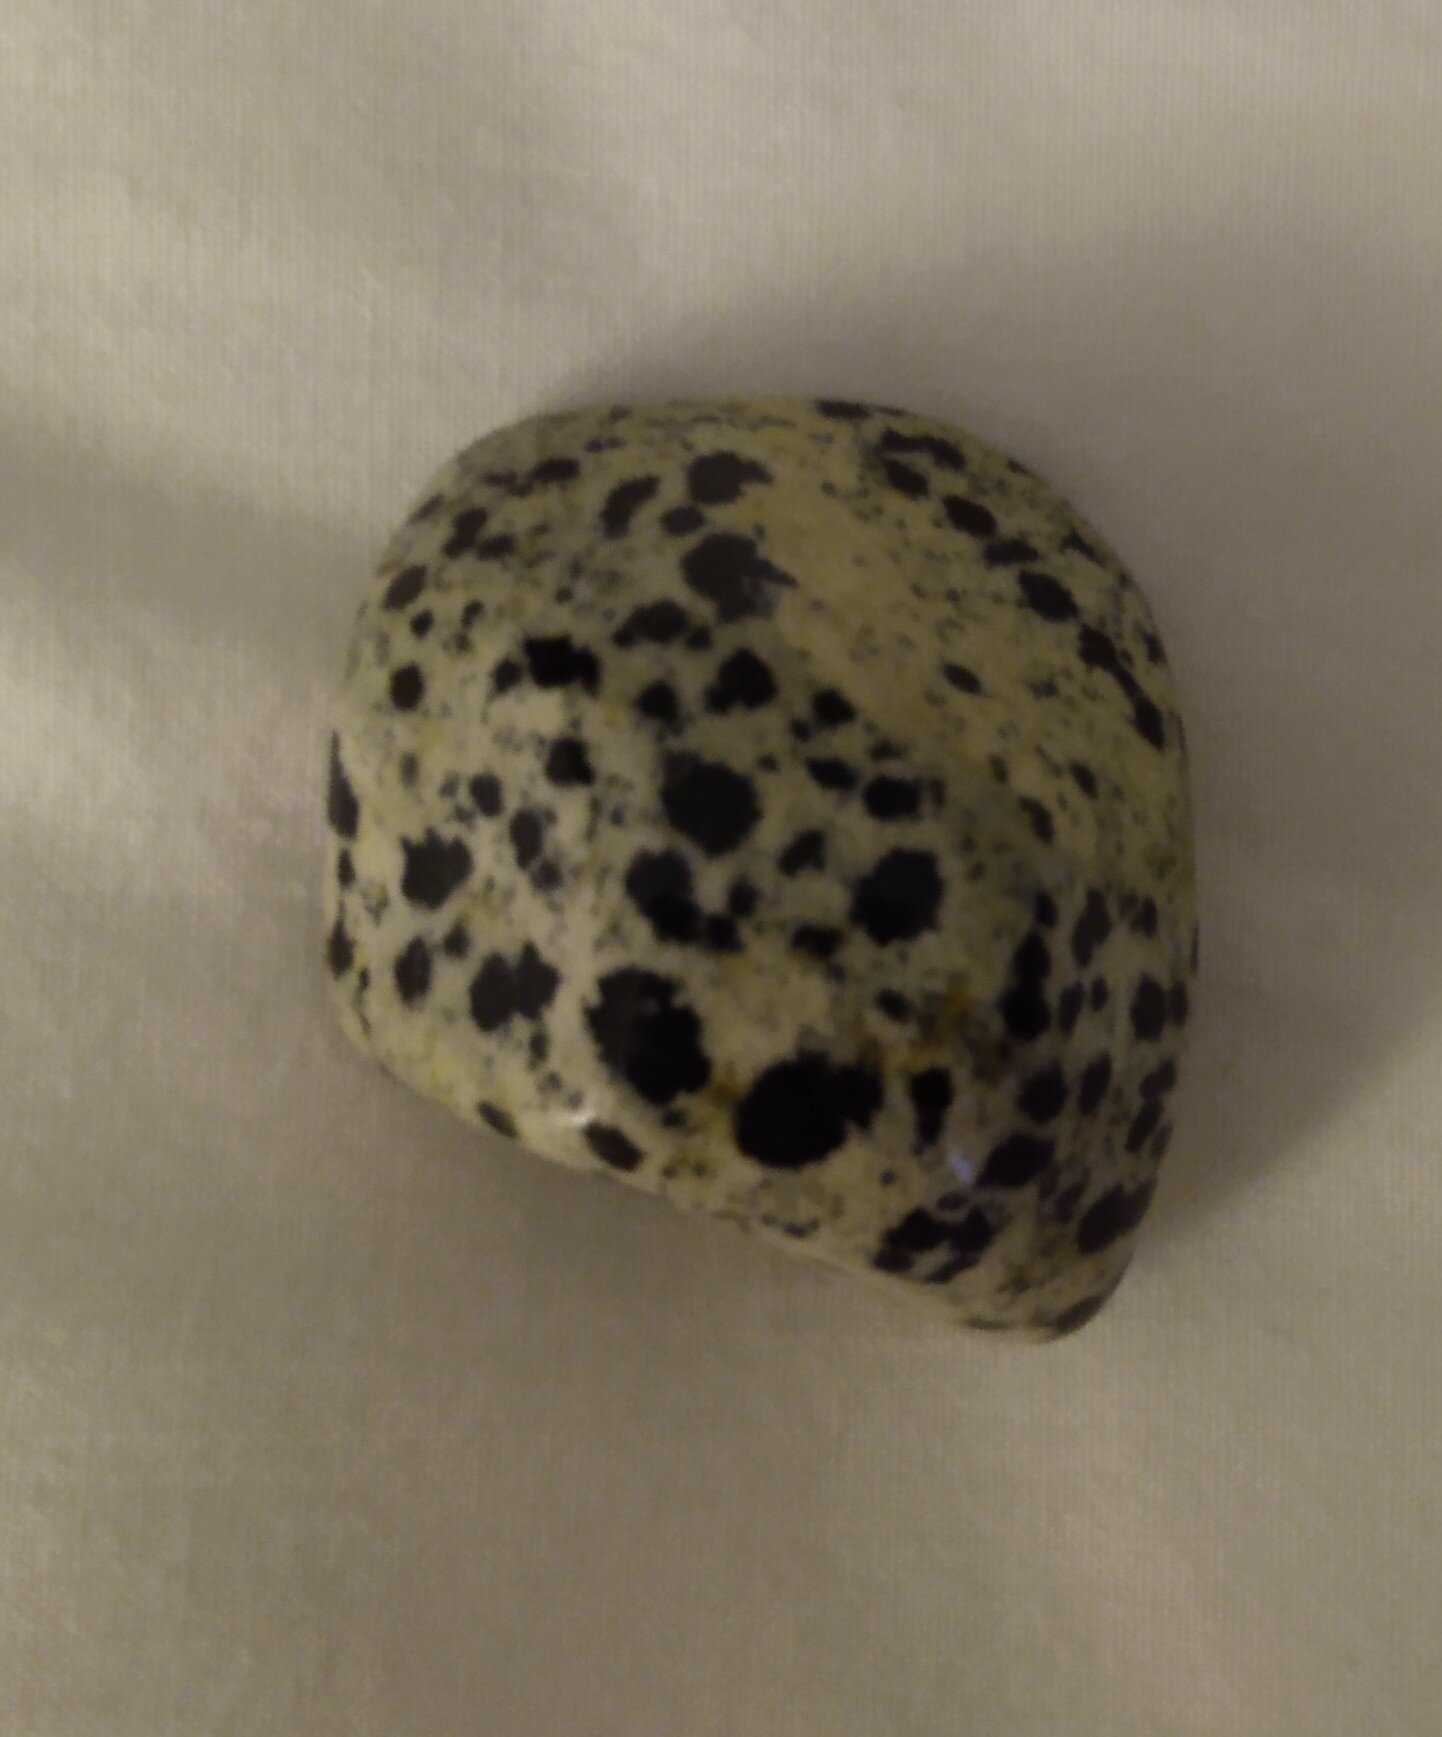 My Dalmatian Stone Photo by Ame Vanorio